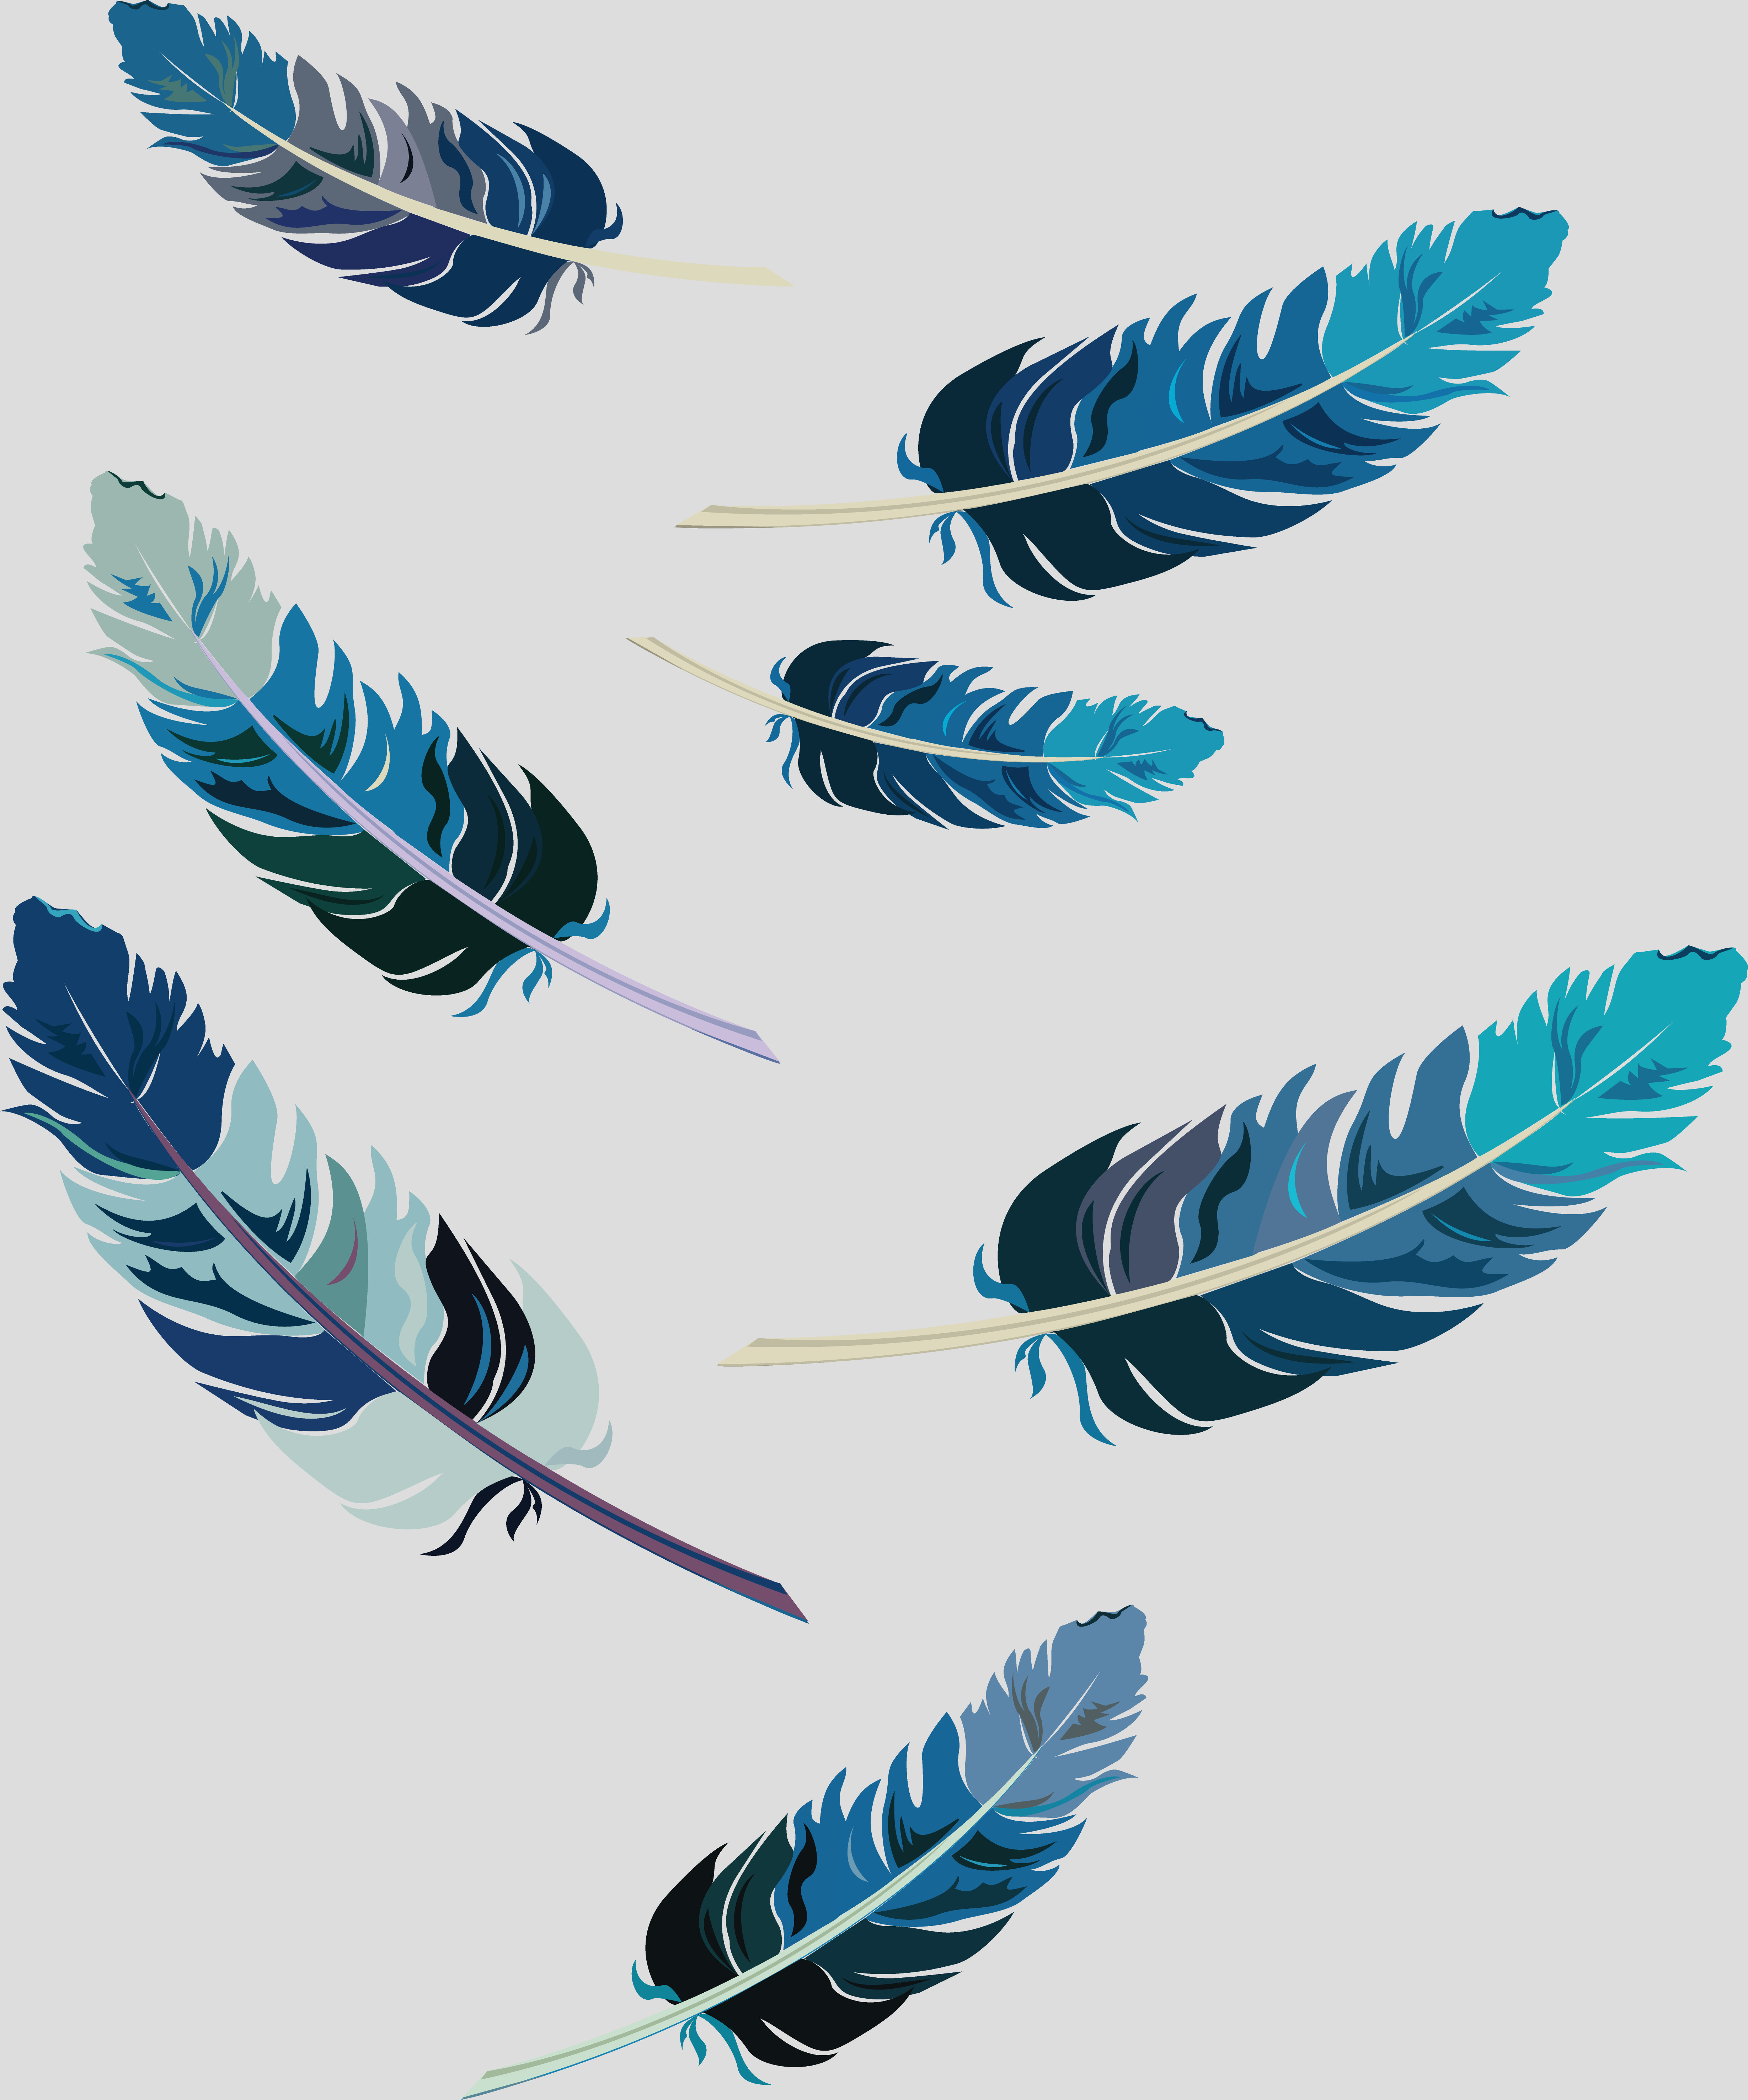 Blue Feathers by artado